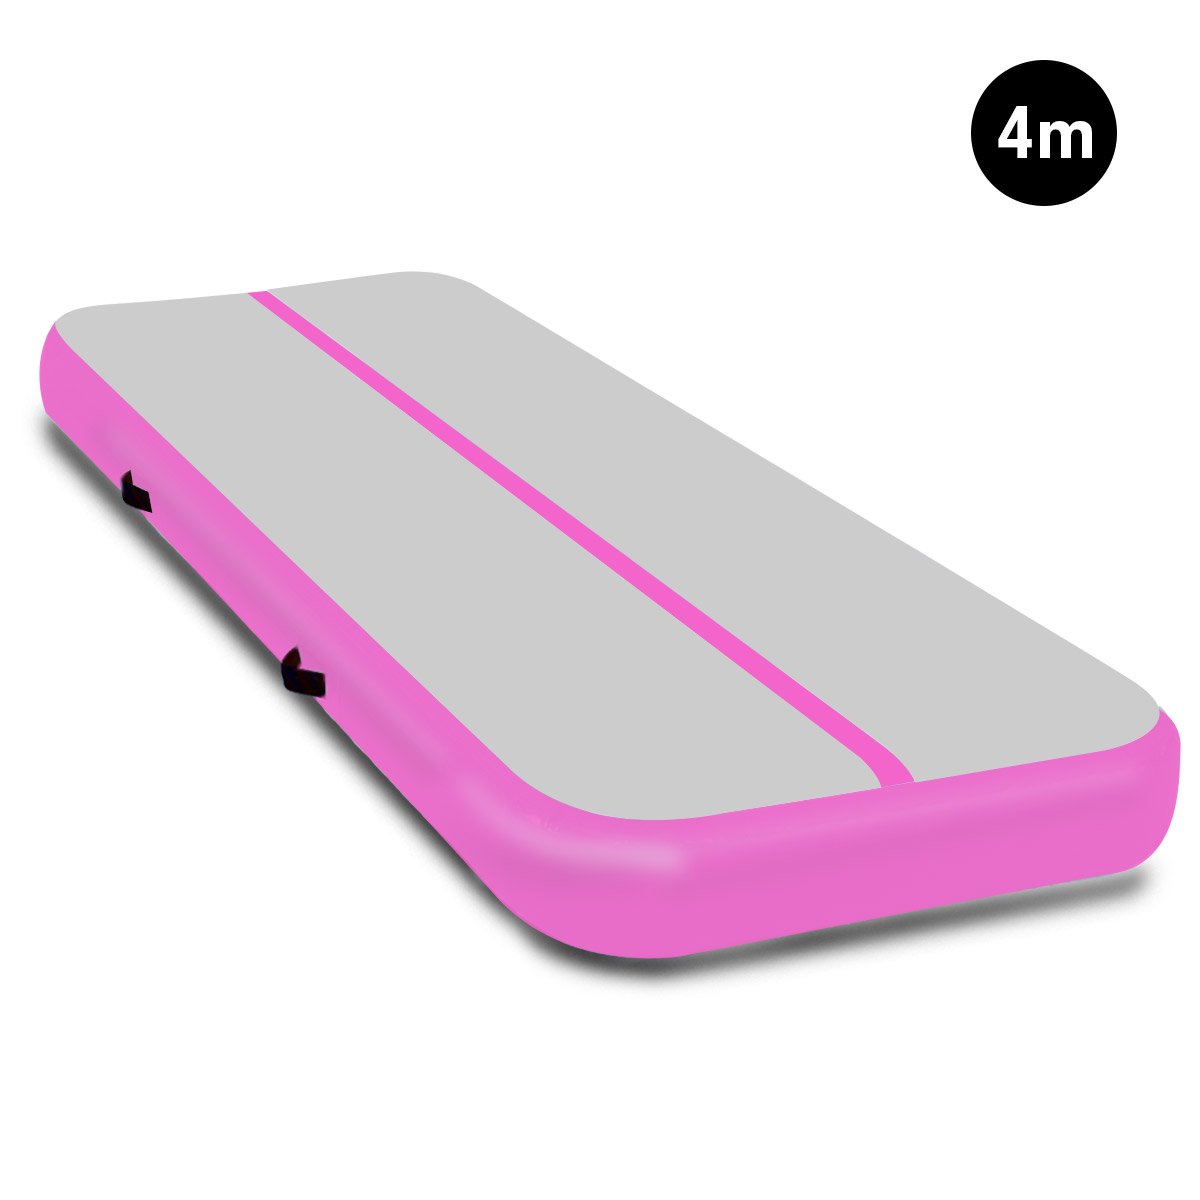 4m x 2m Air Track Gymnastics Mat Tumbling Exercise - Grey Pink 2